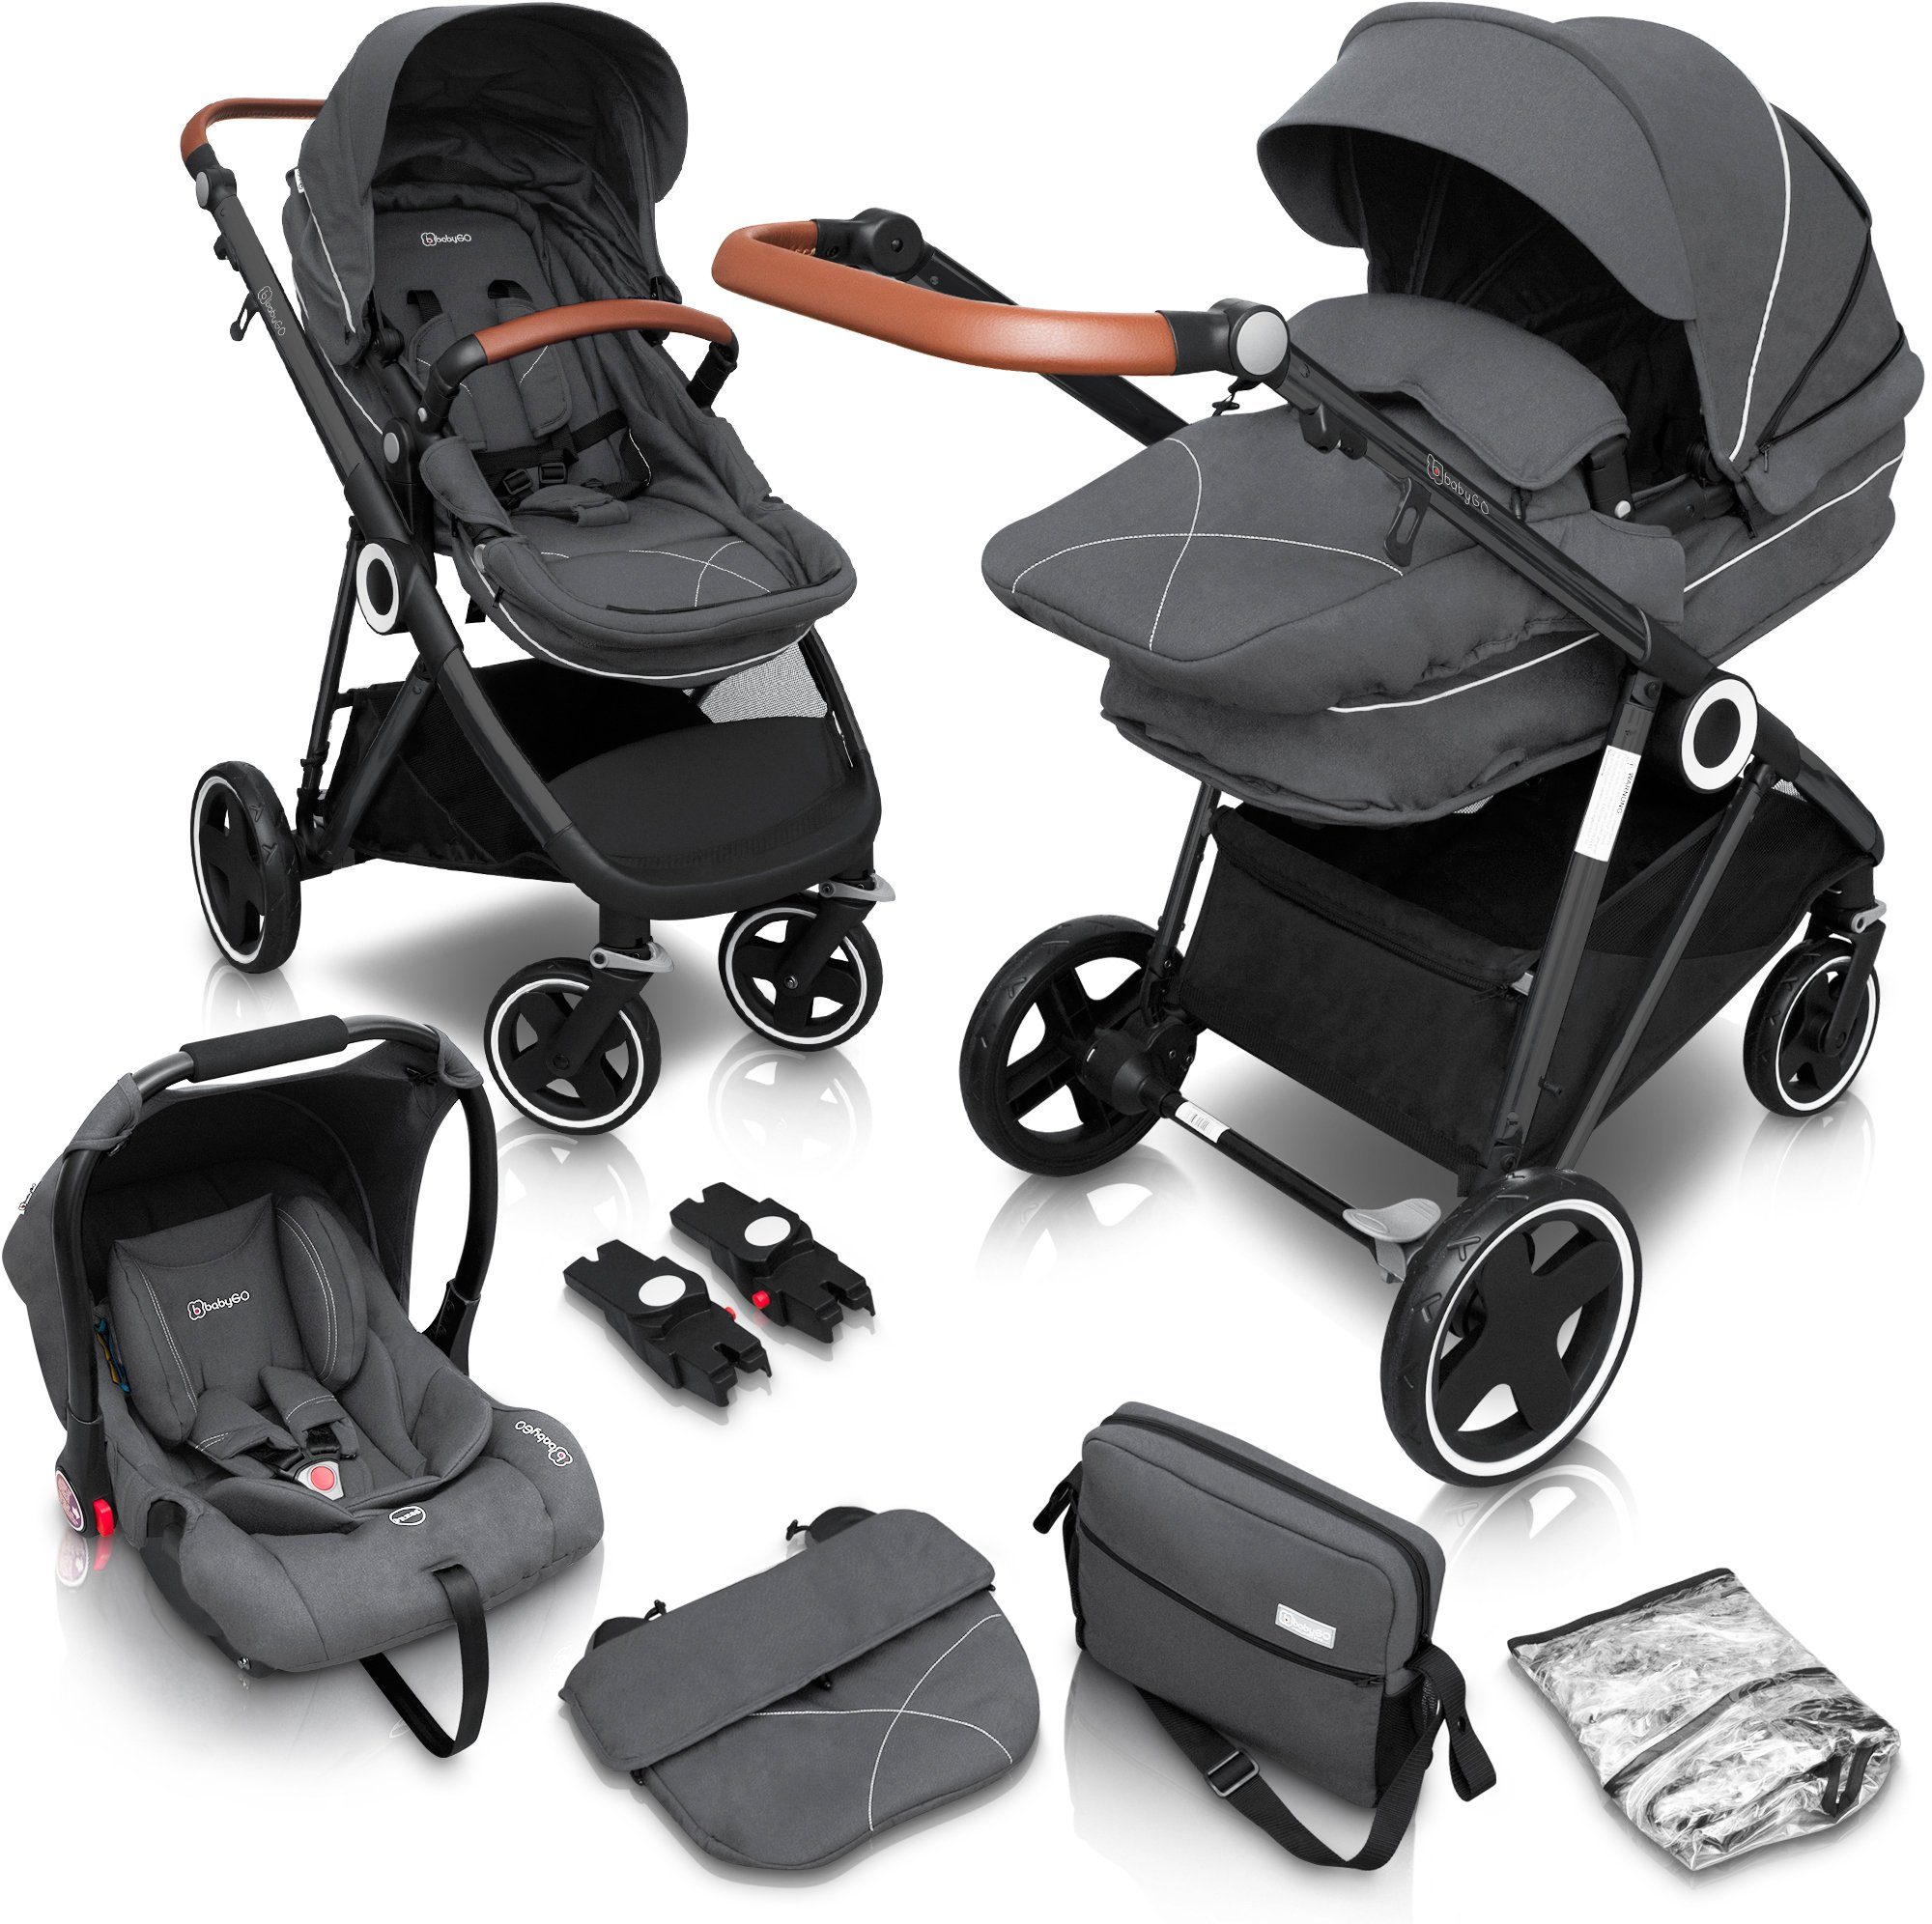 BabyGo Kombi-Kinderwagen Halime 3in1, Grey Black, inklusive Babywanne, Babyschale, Regenhaube & Wickeltasche